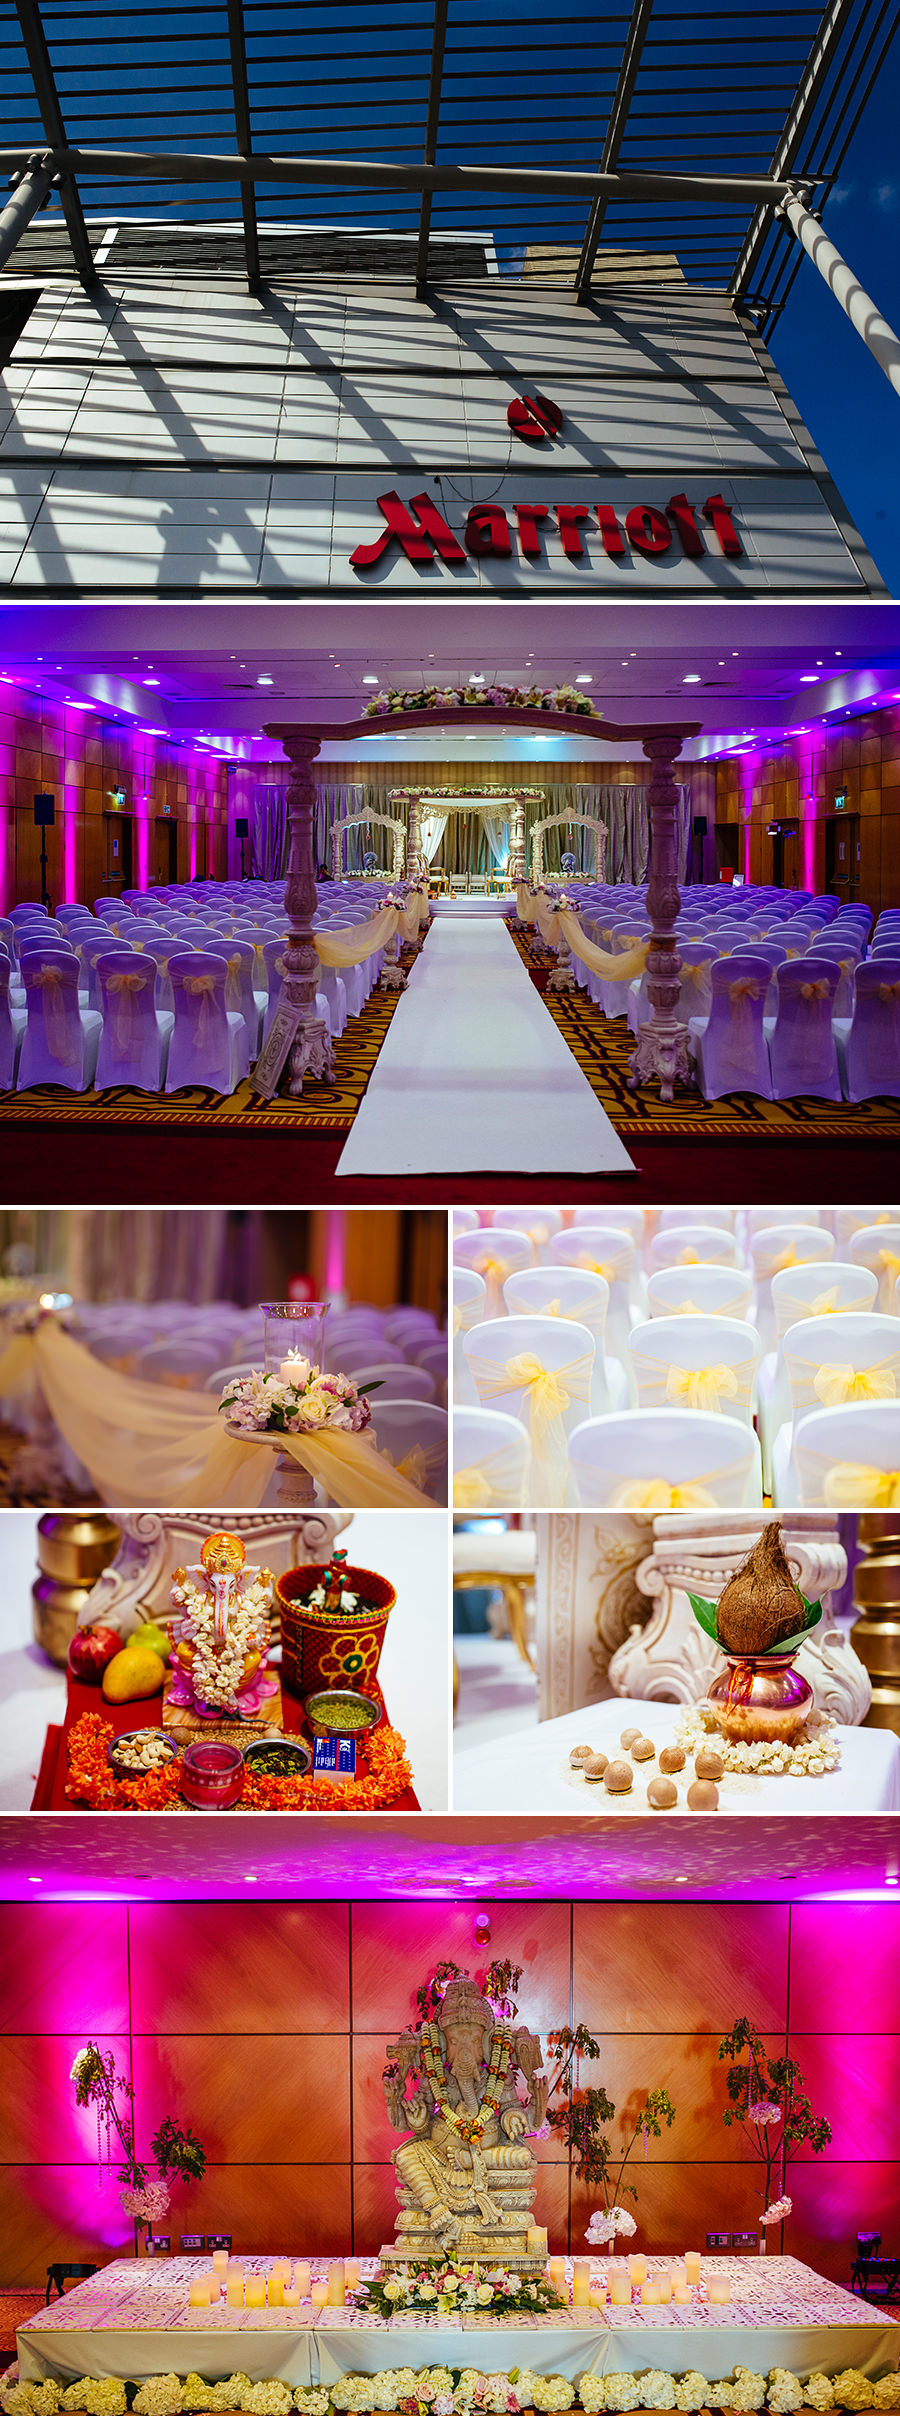 02_destination_indian_wedding_marriott wedding_top wedding photography_wedding details_02